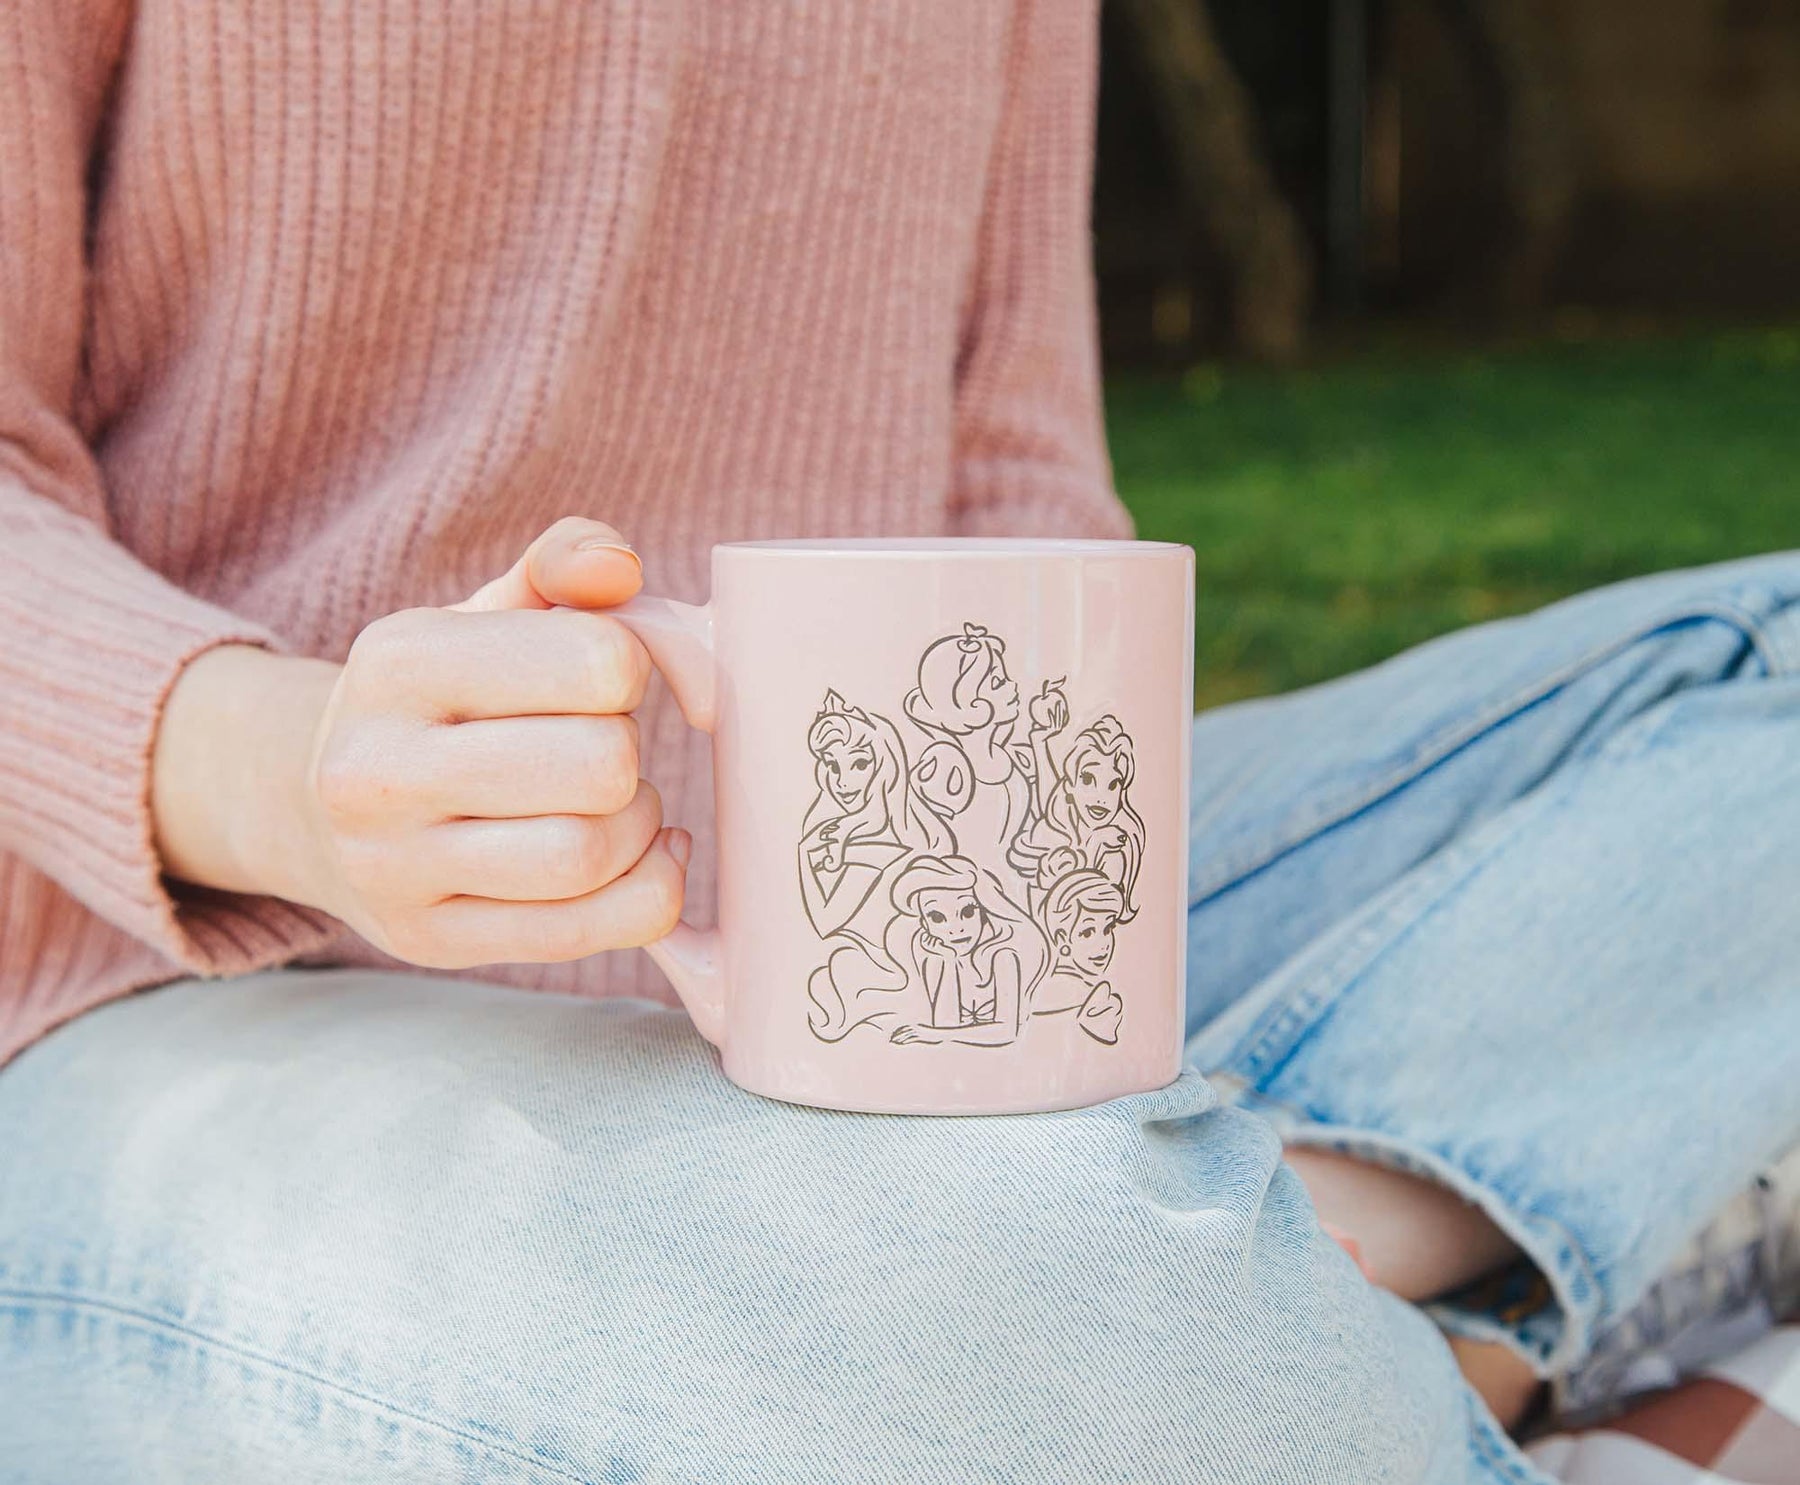 Disney Princess Pink Wax-Resist Ceramic Mug | Holds 14 Ounces